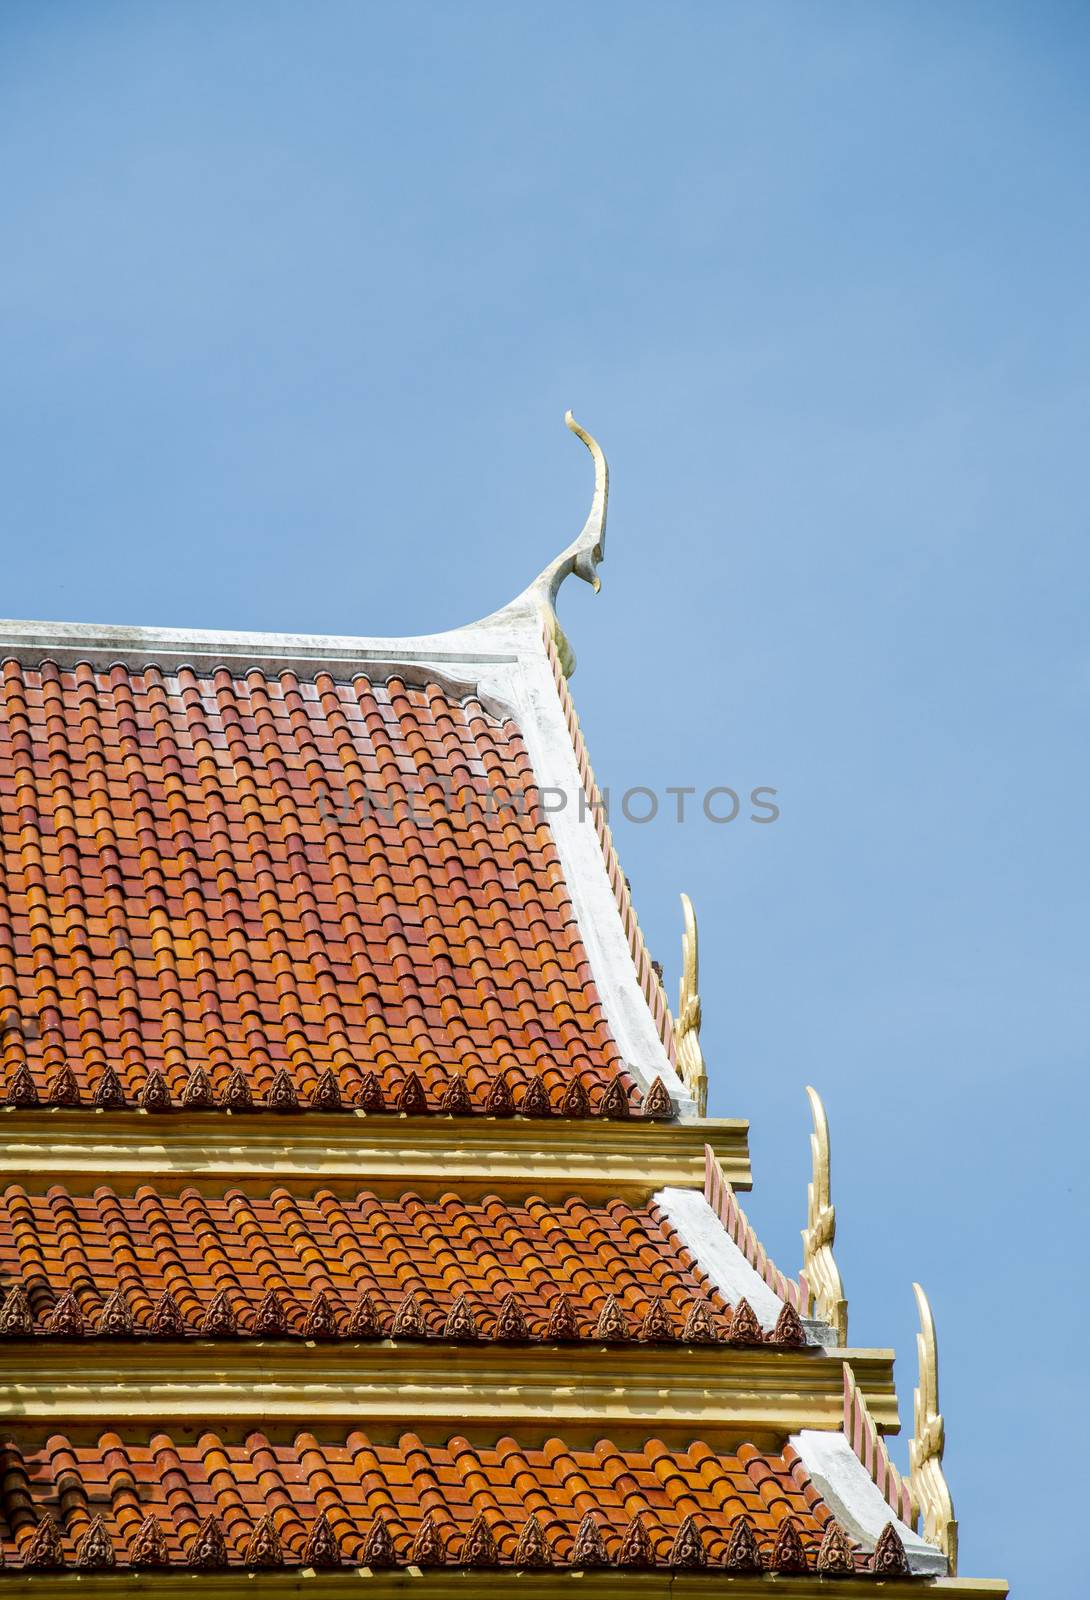 Roof temple of Thai style1 by gjeerawut